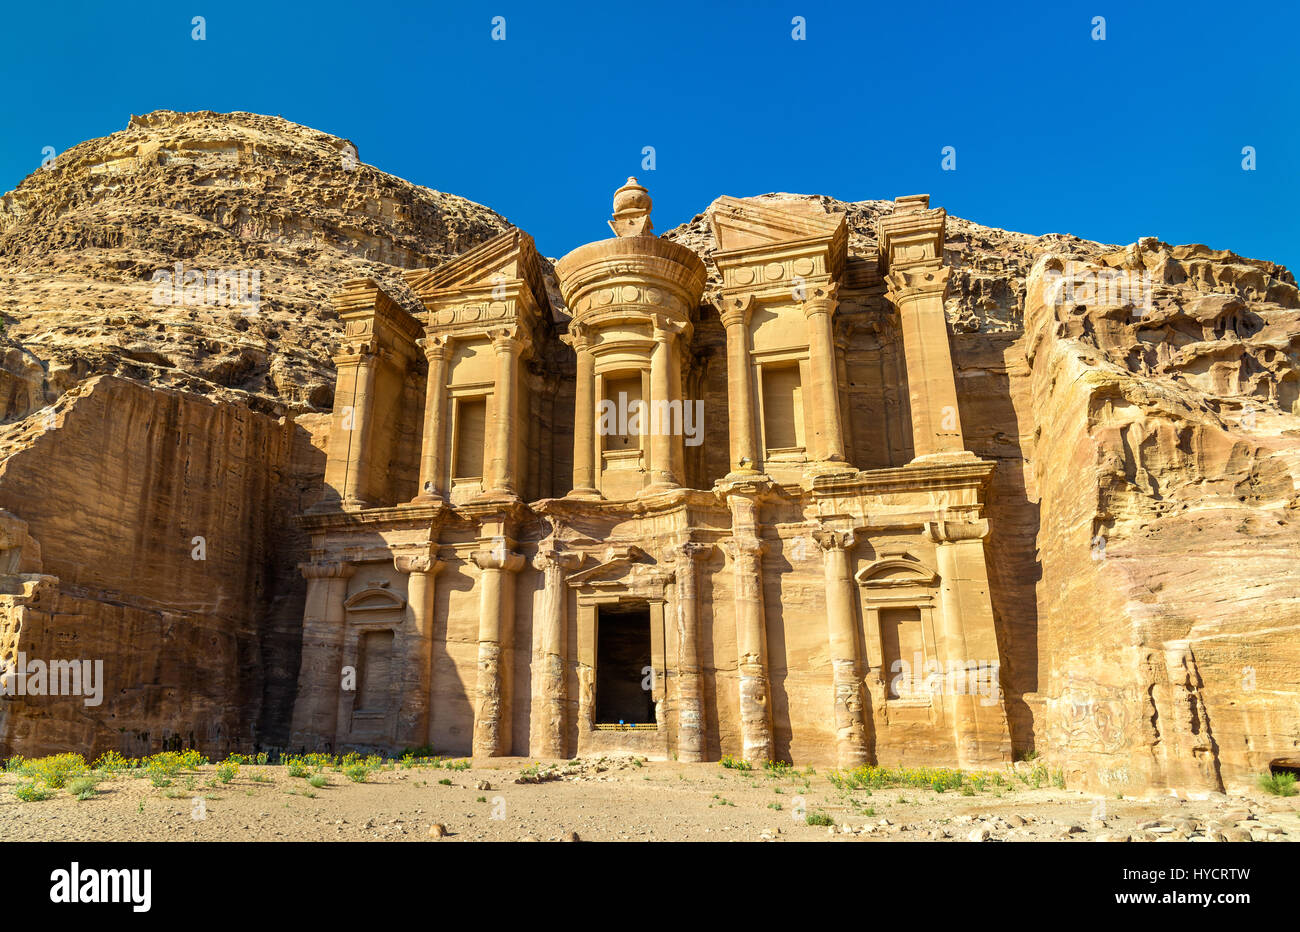 Ad Deir, the Monastery at Petra. UNESCO heritage site Stock Photo